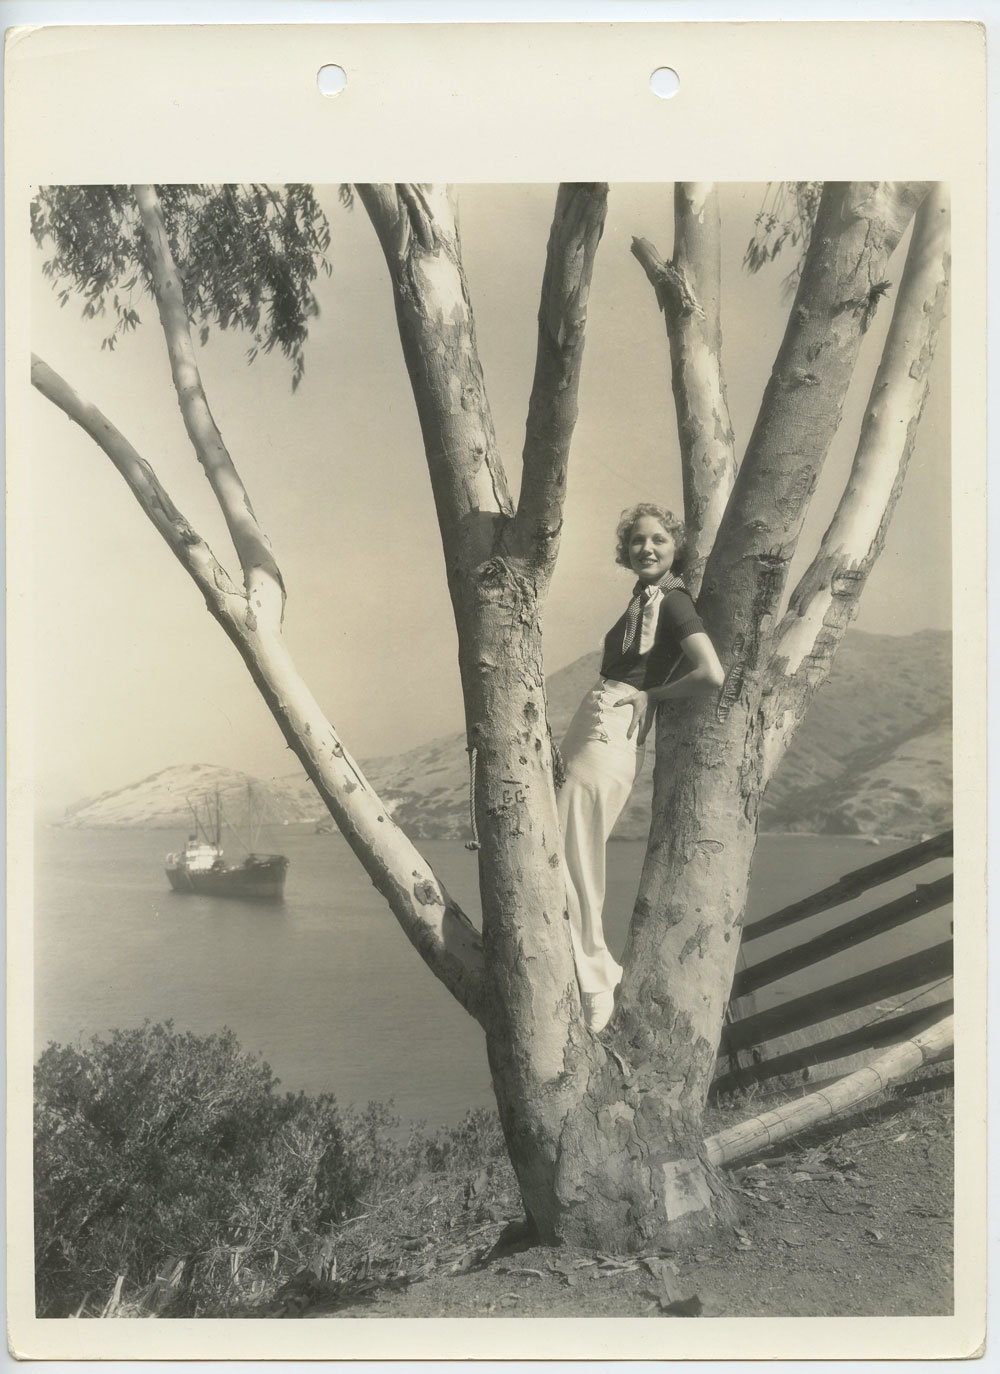 Leila Hyams Photo 1930s Publicity Promo Original Vintage